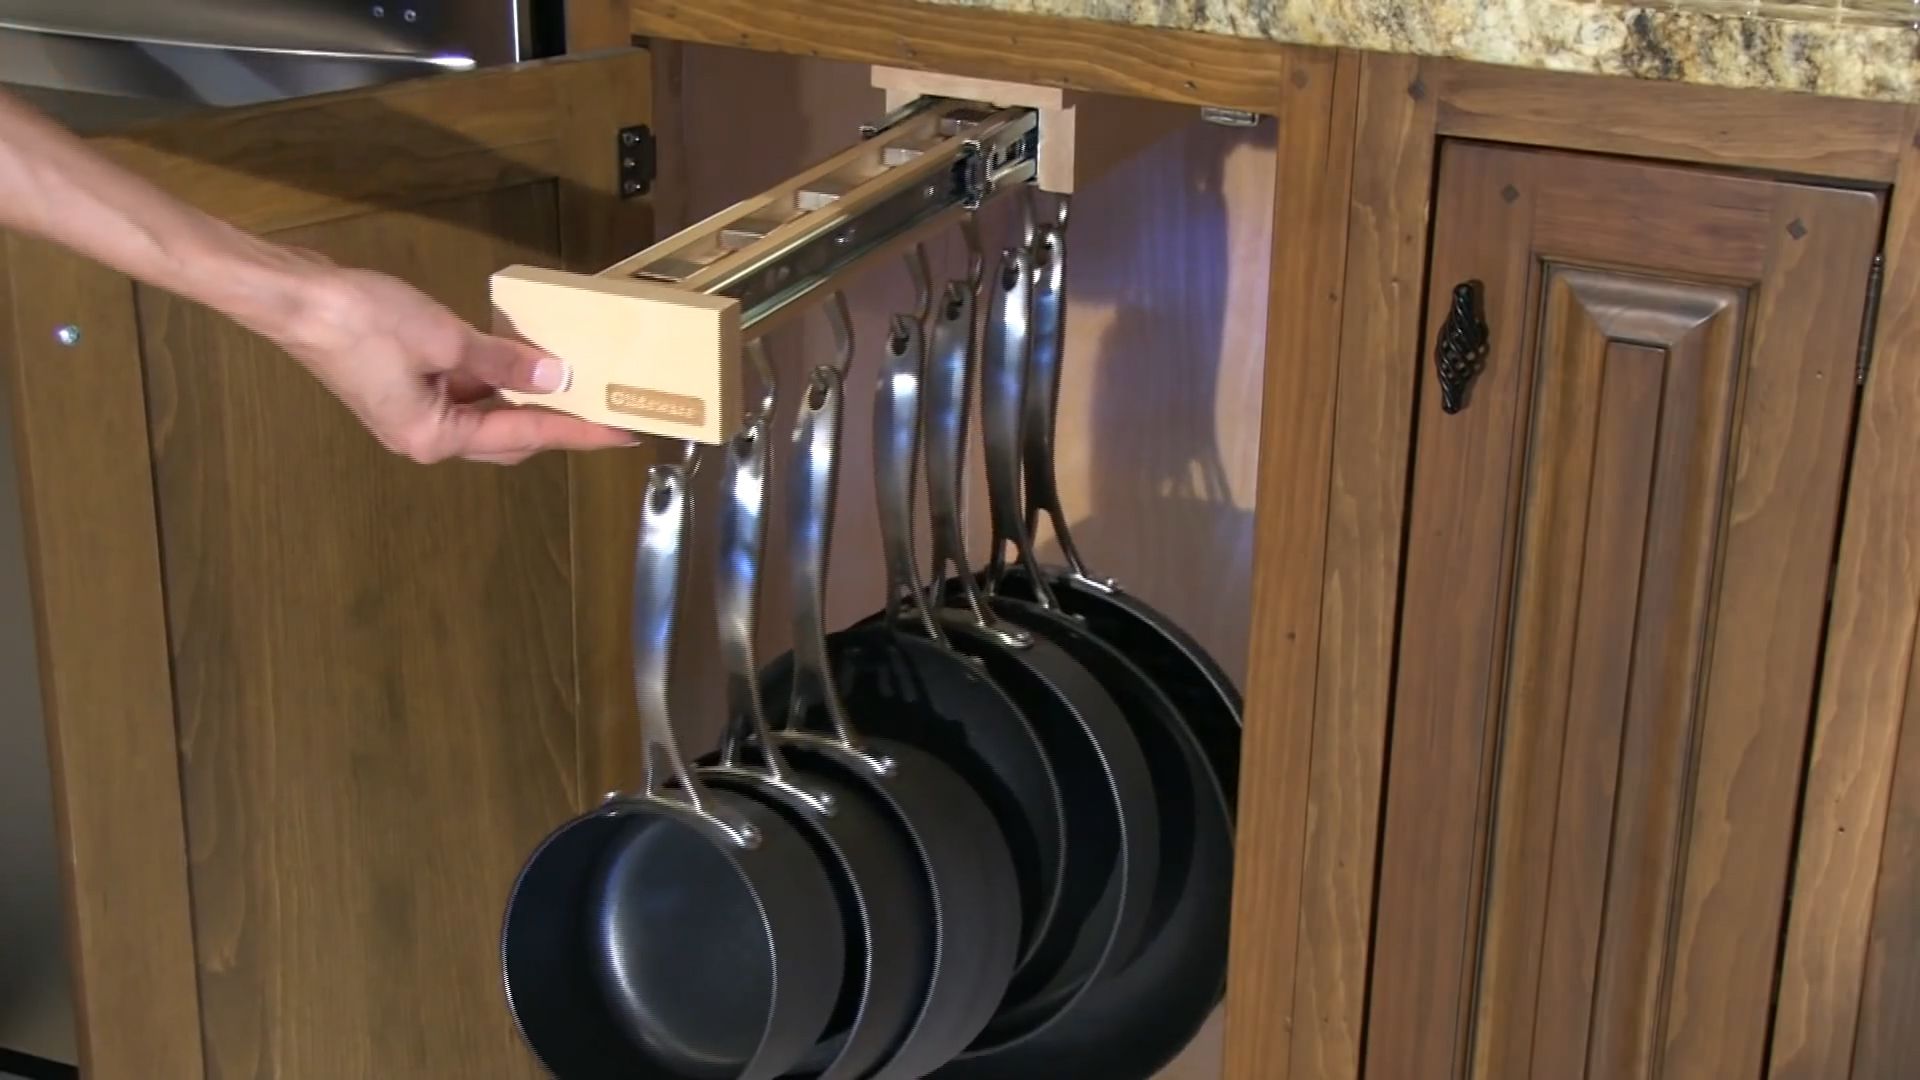 Pull Out Cabinet Rack Cookware Organizer Pots Pans Lids Holder